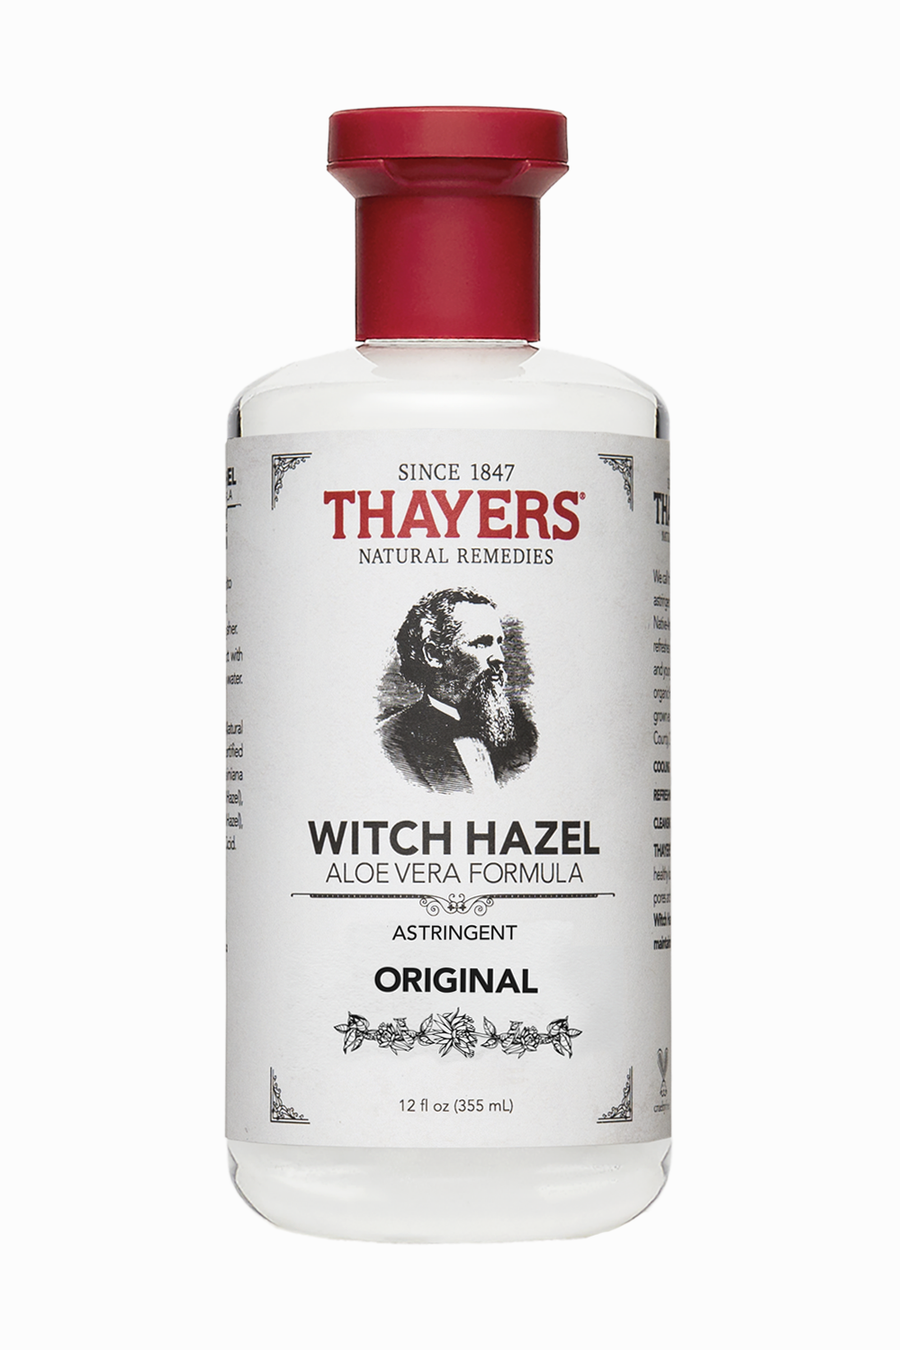 Thayers Original Witch Hazel Astringent